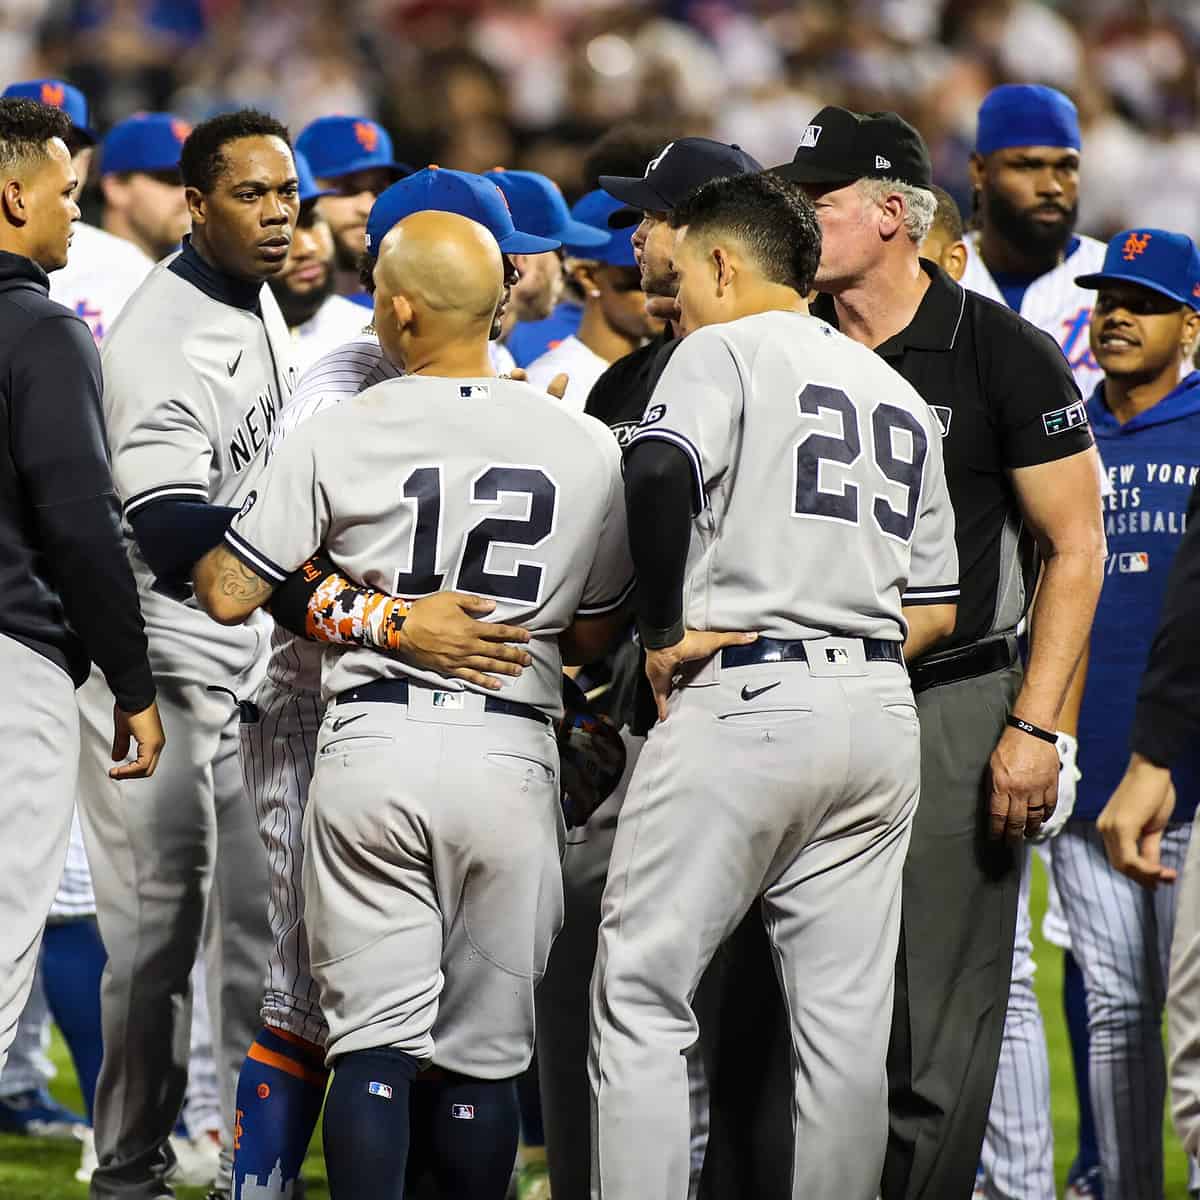 Yankees Vs. Mets: All-Time Subway Series Leaders - SB Nation New York